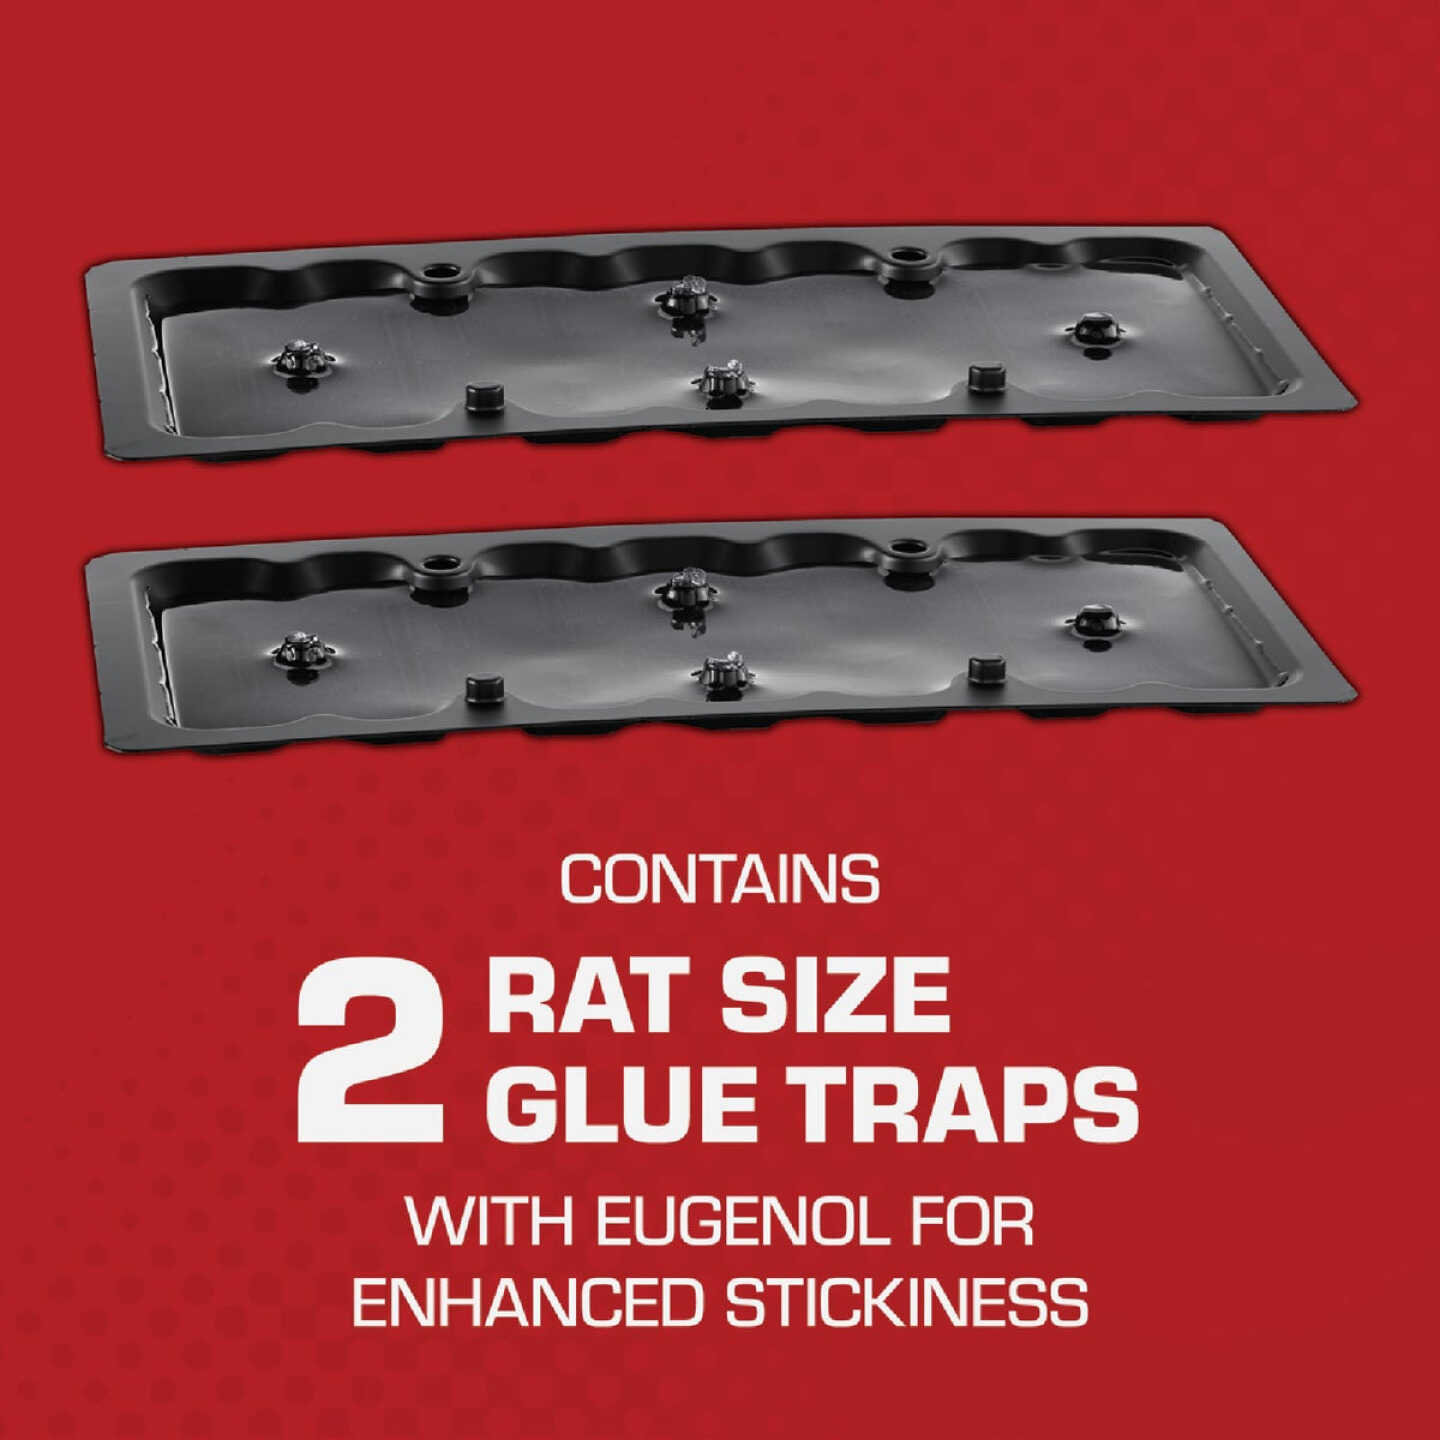 TOMCAT Mouse Size Glue Traps (4-Pack) - Brownsboro Hardware & Paint